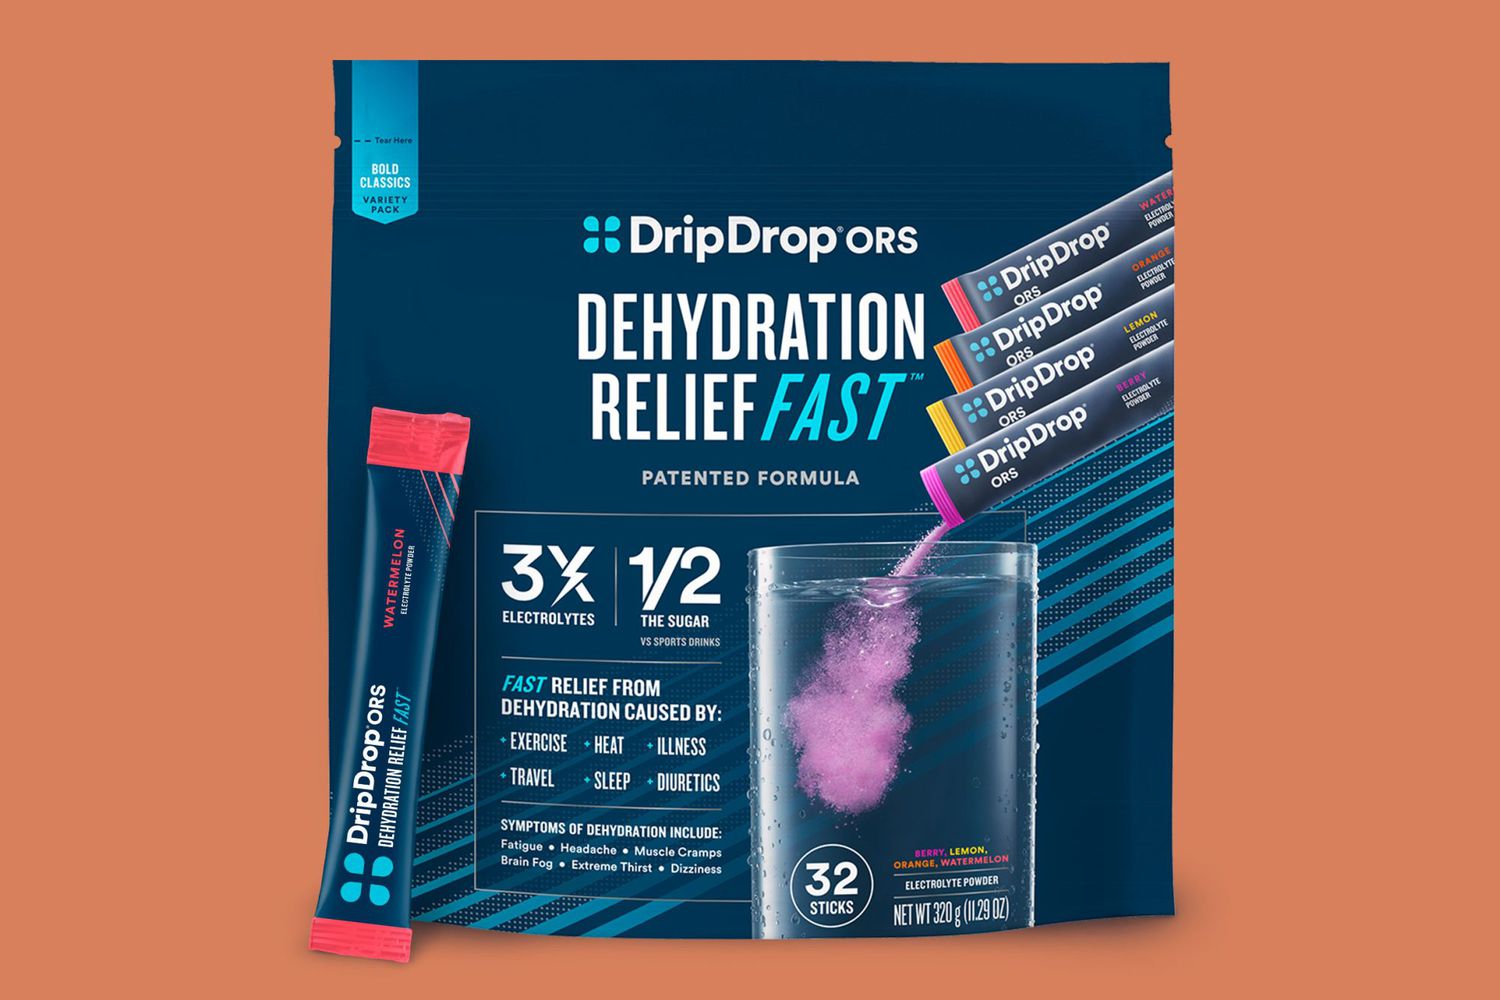 DripDrop ORS variety pack